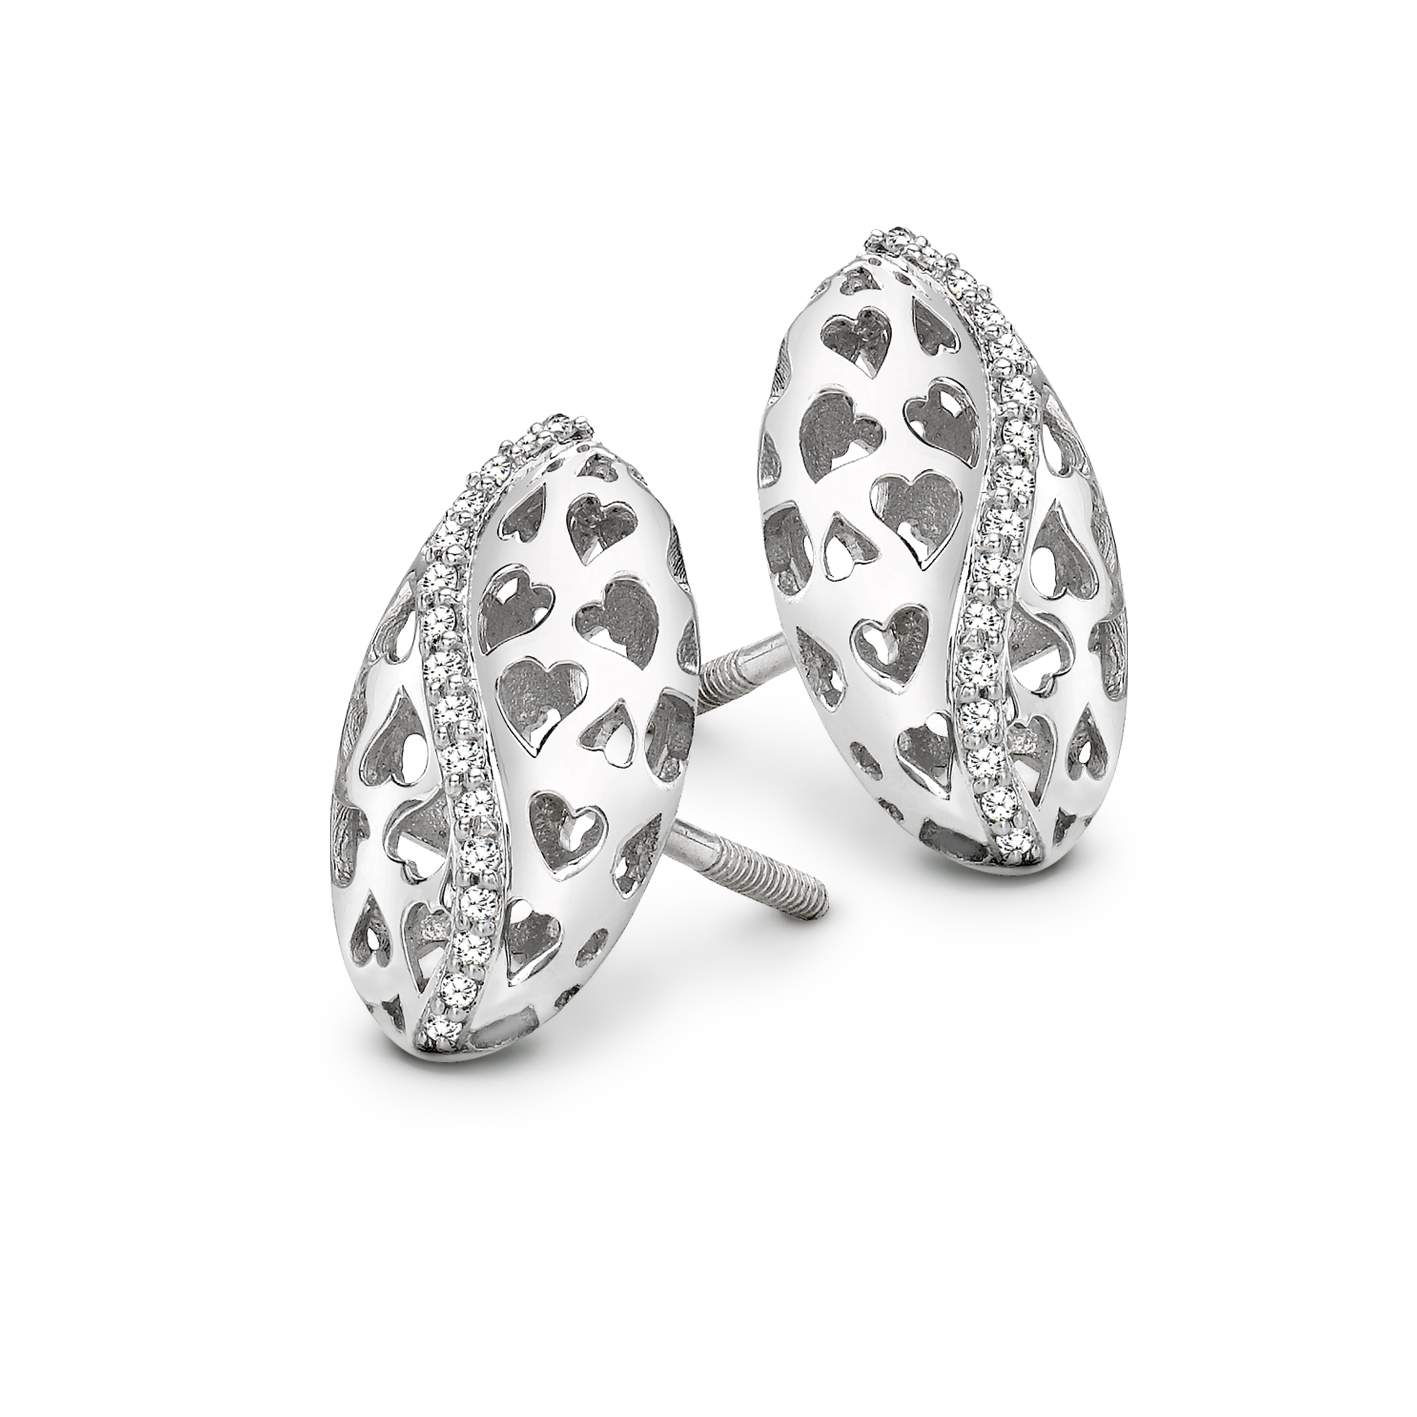 Platinum earrings for Valentine's Day